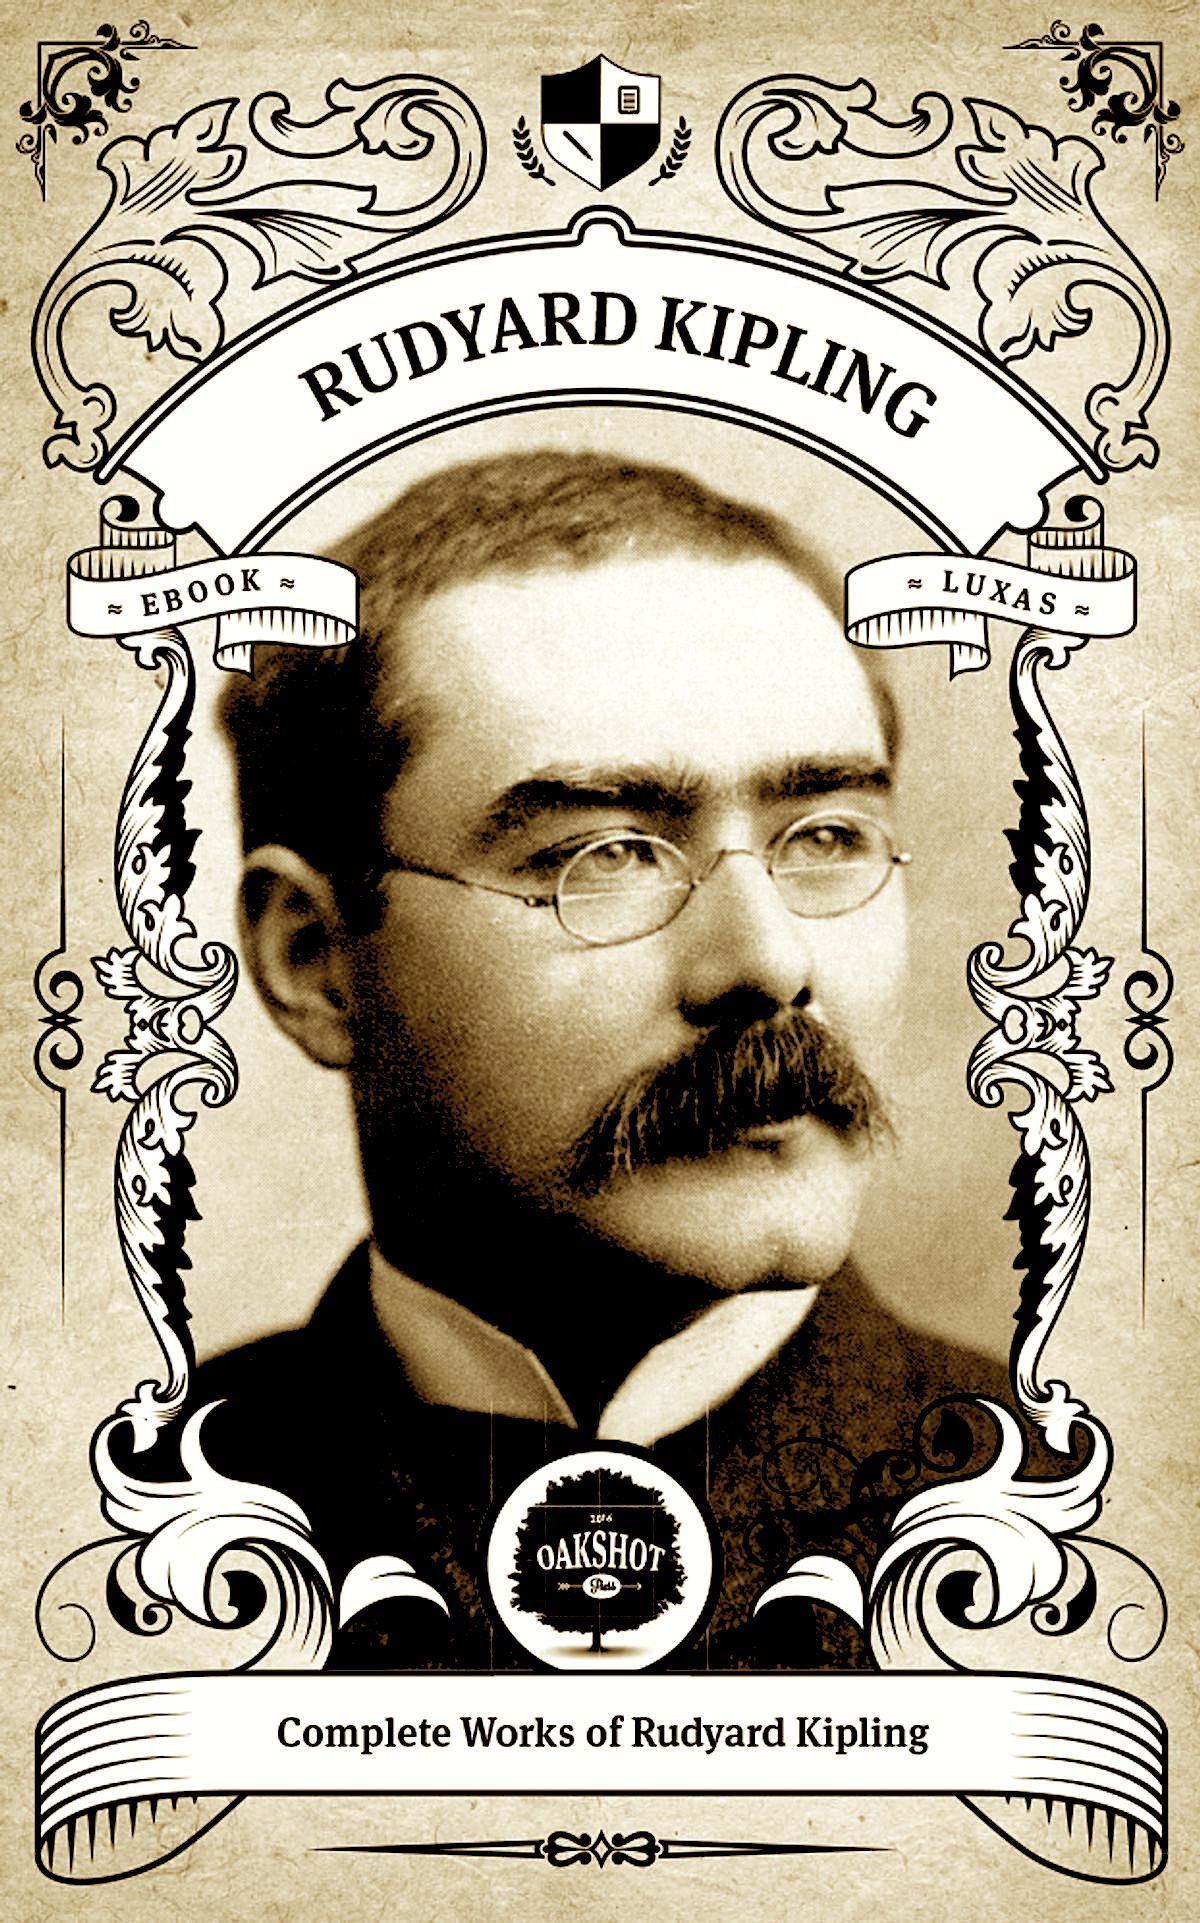 Rudyard Kipling (1865-1936)